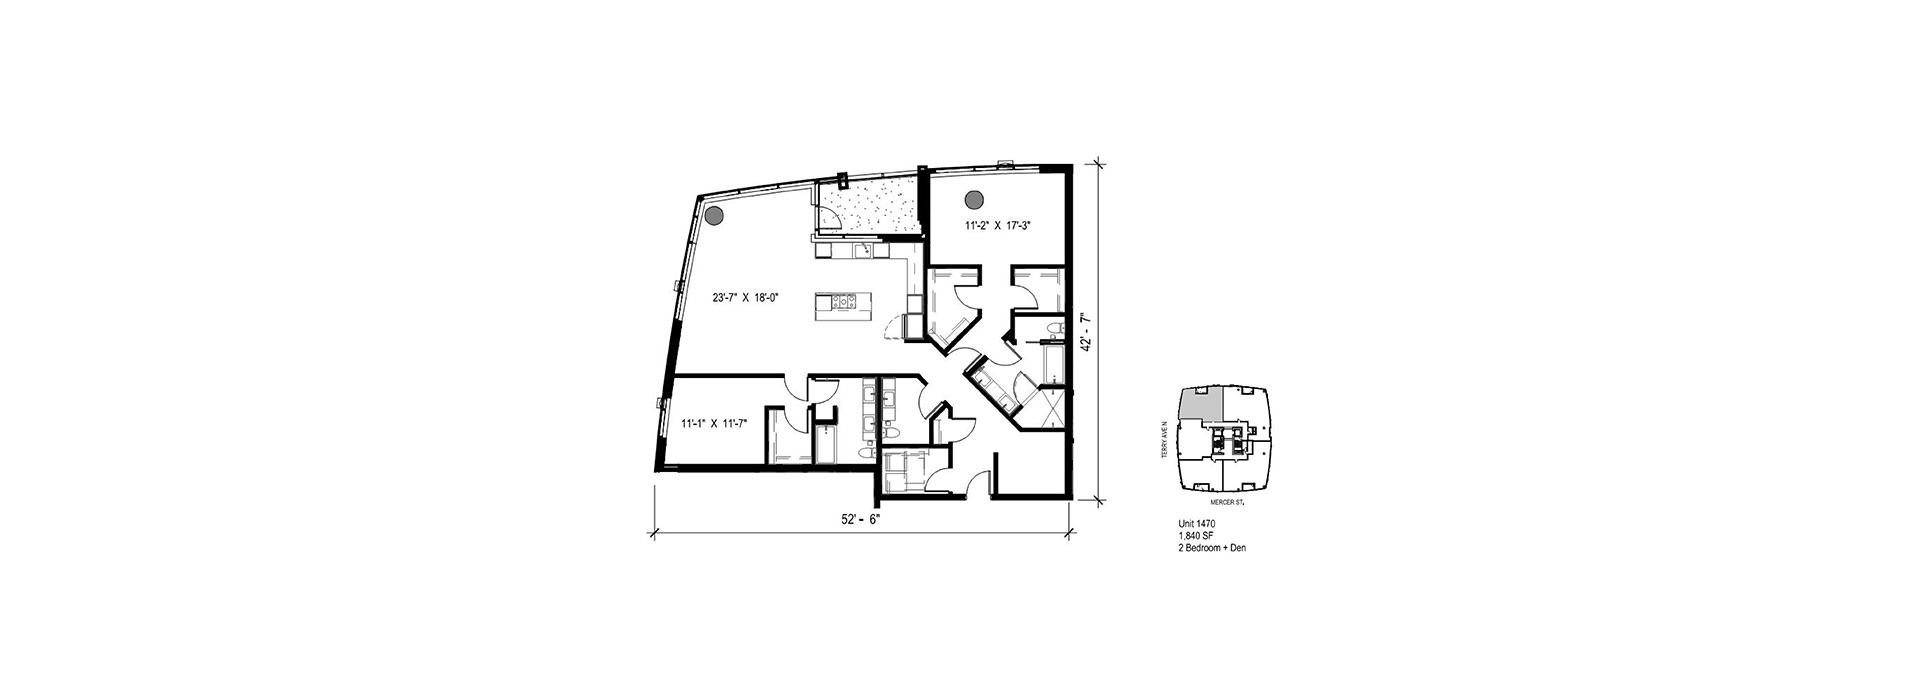 Floor layout diagram